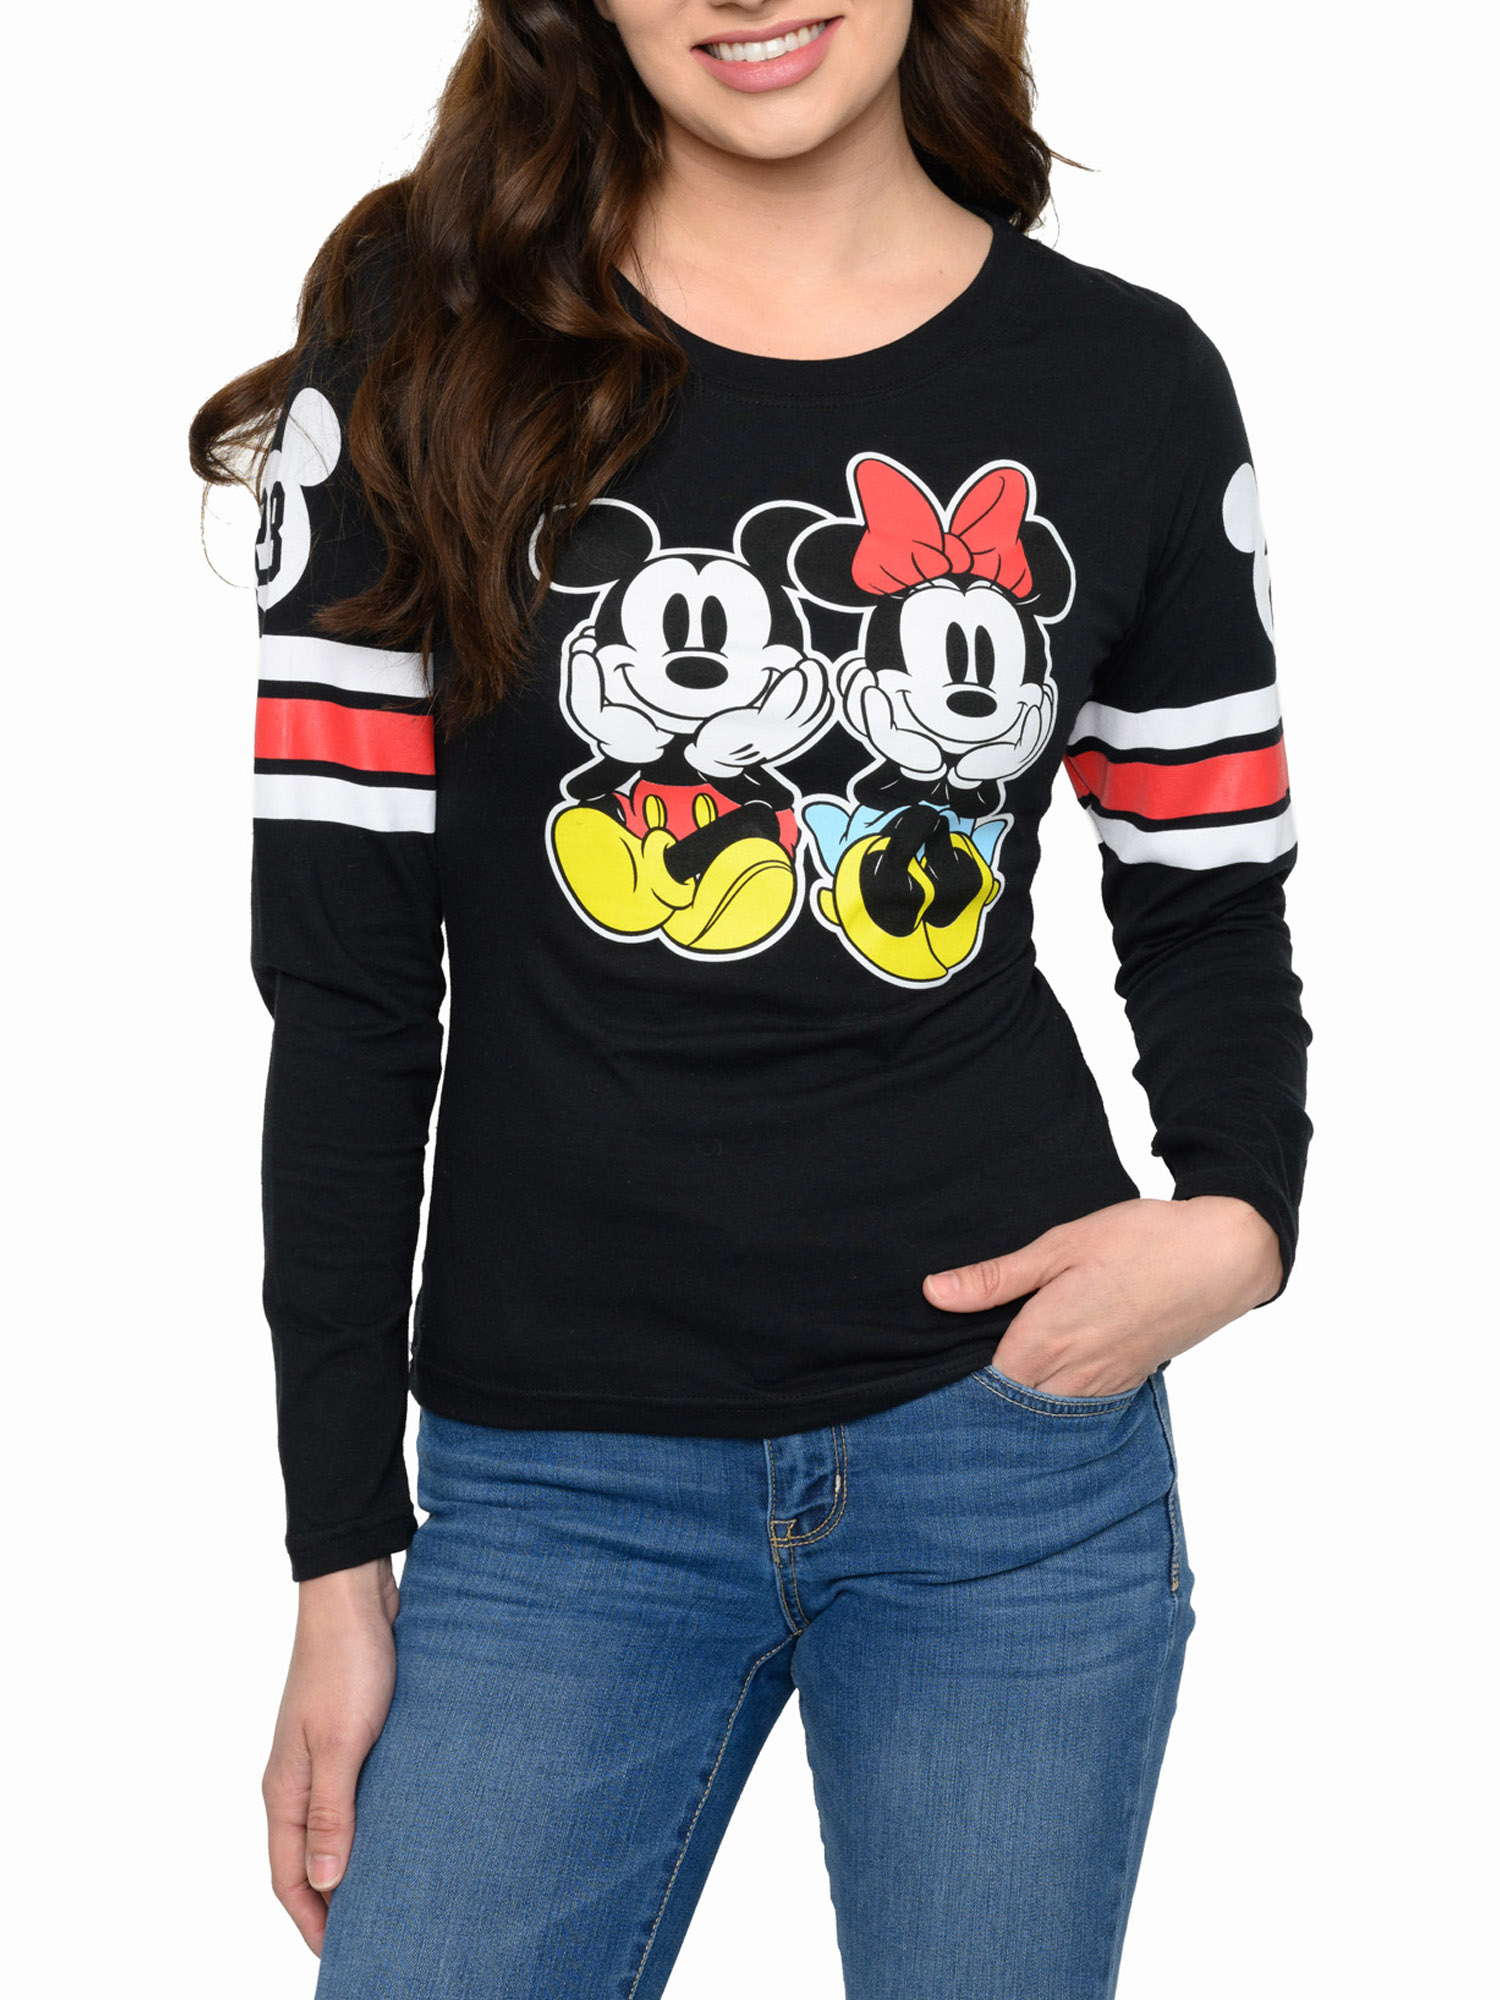 Disney Mickey & Minnie Mouse T-Shirt Long Sleeve Slim Fit Juniors Disney (Size Small)